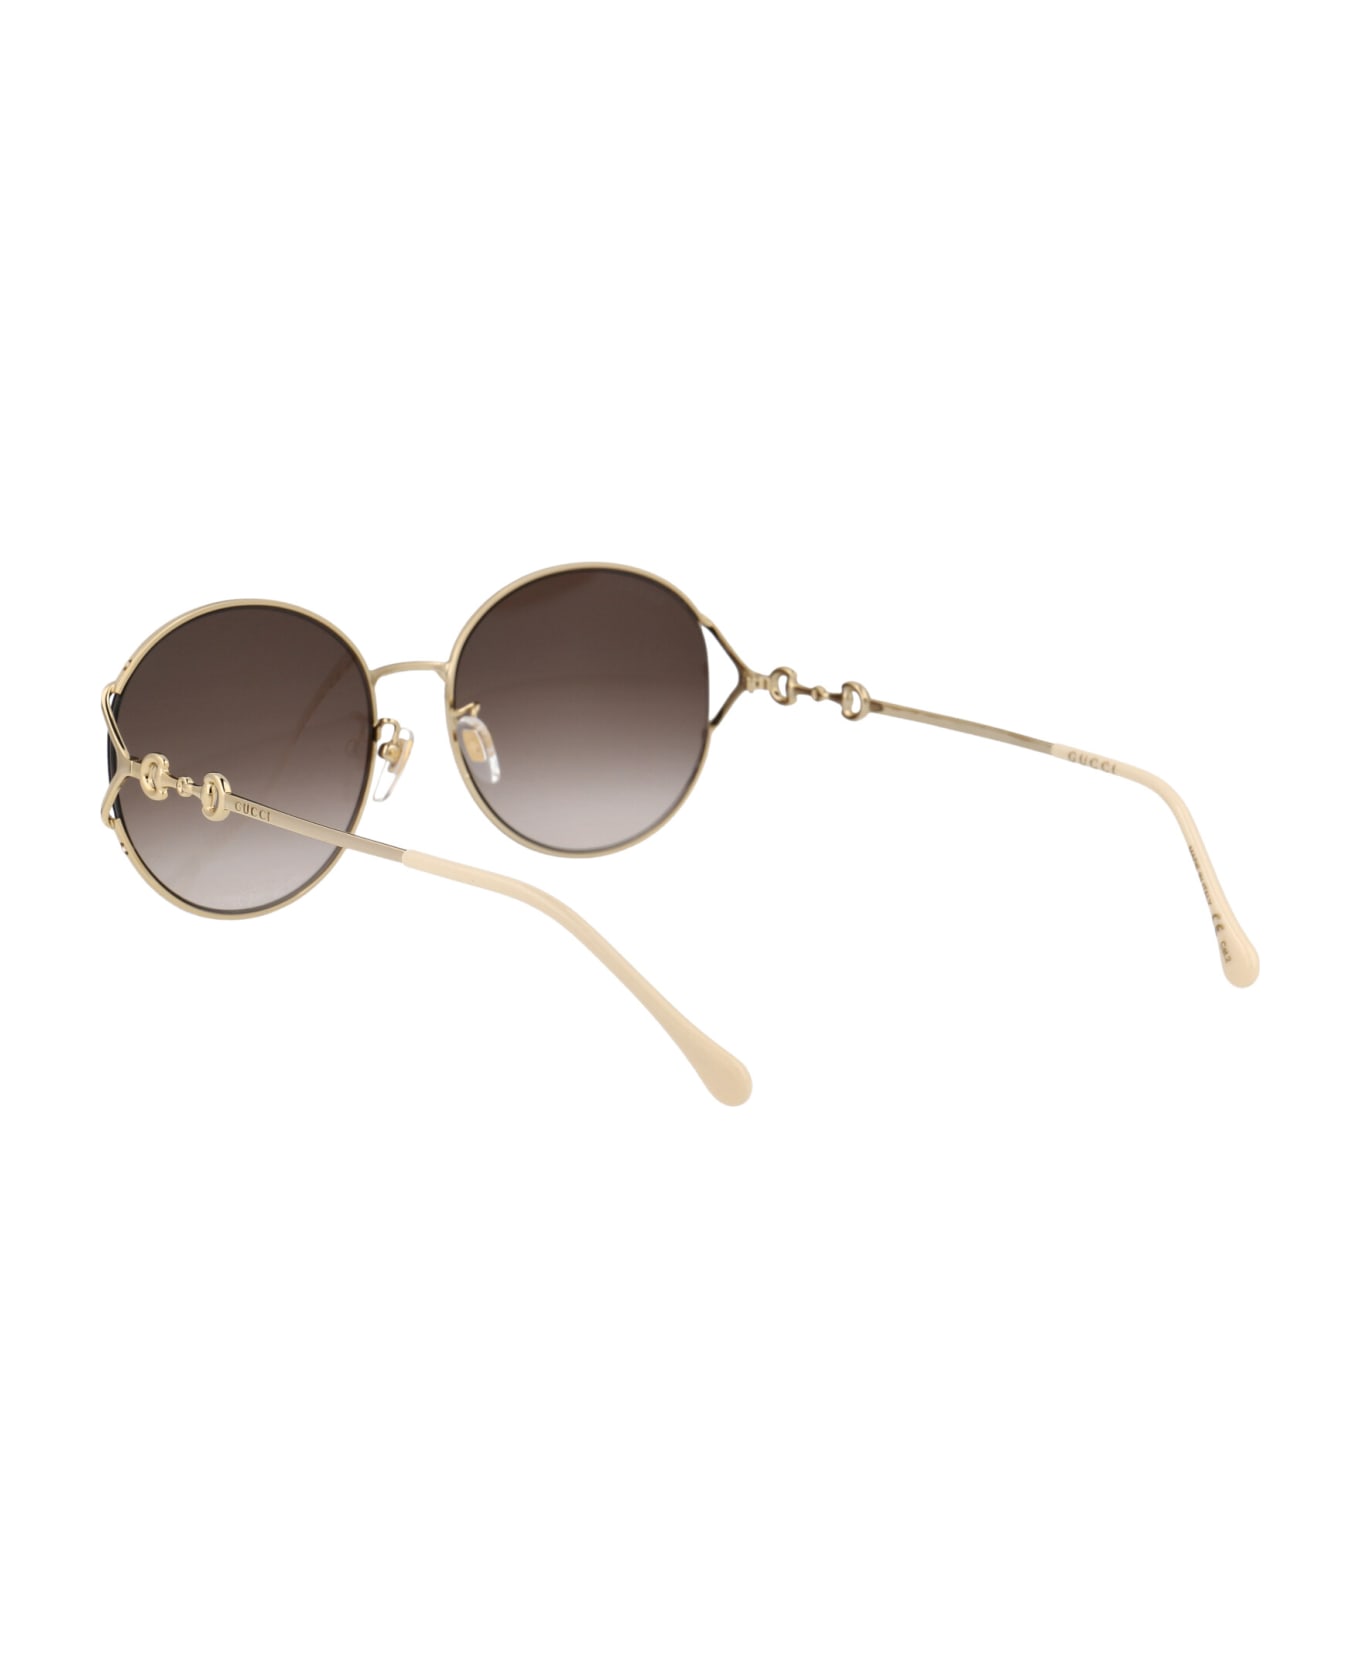 Gucci Eyewear Gg1017sk Sunglasses - 003 GOLD GOLD BROWN サングラス